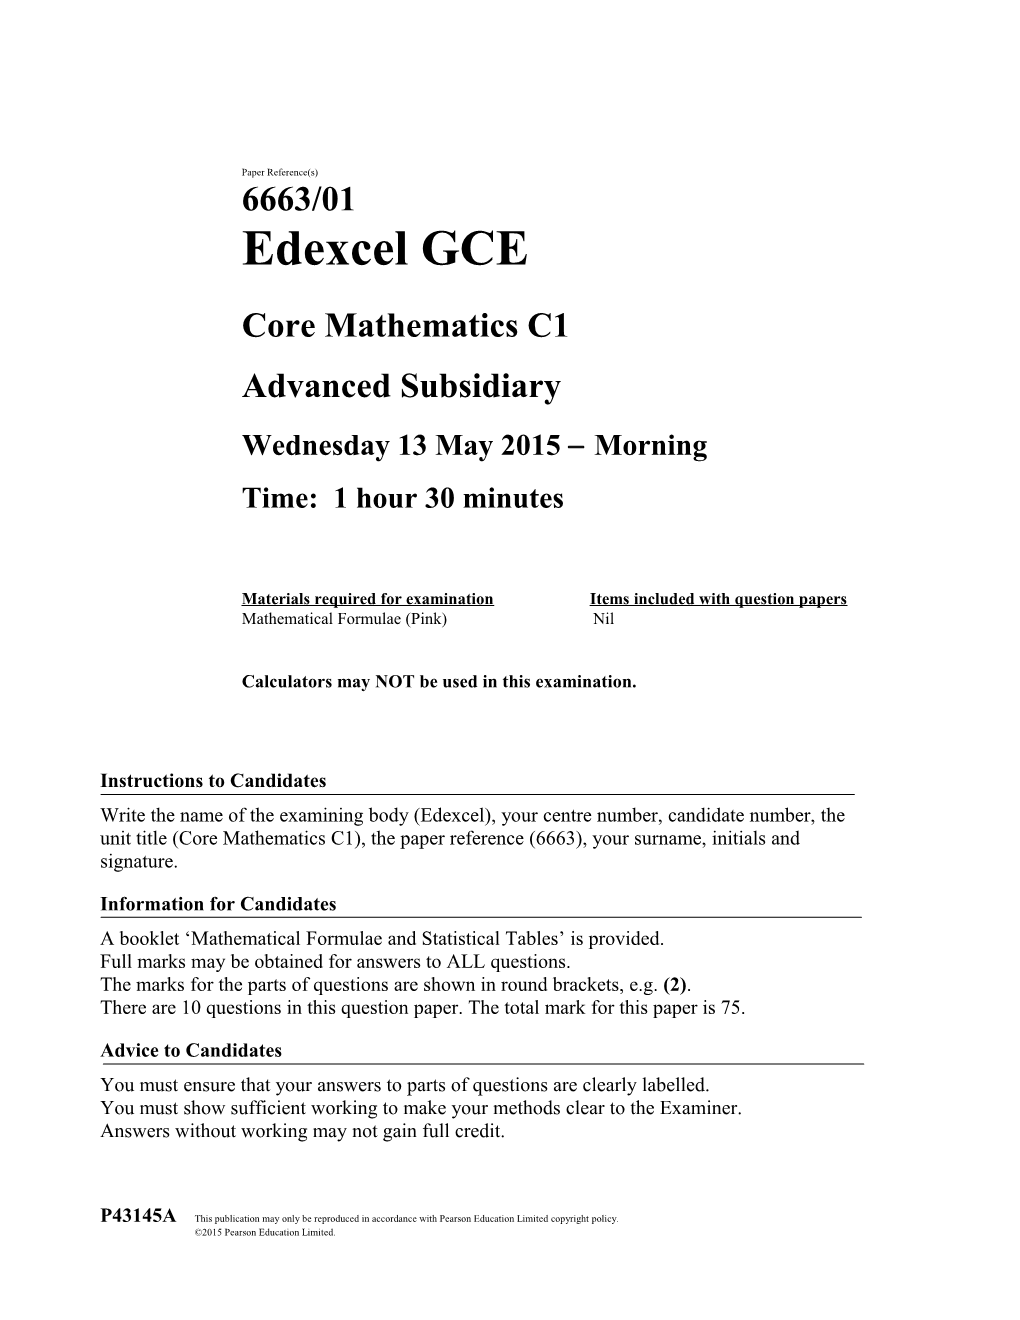 Core Mathematics C1